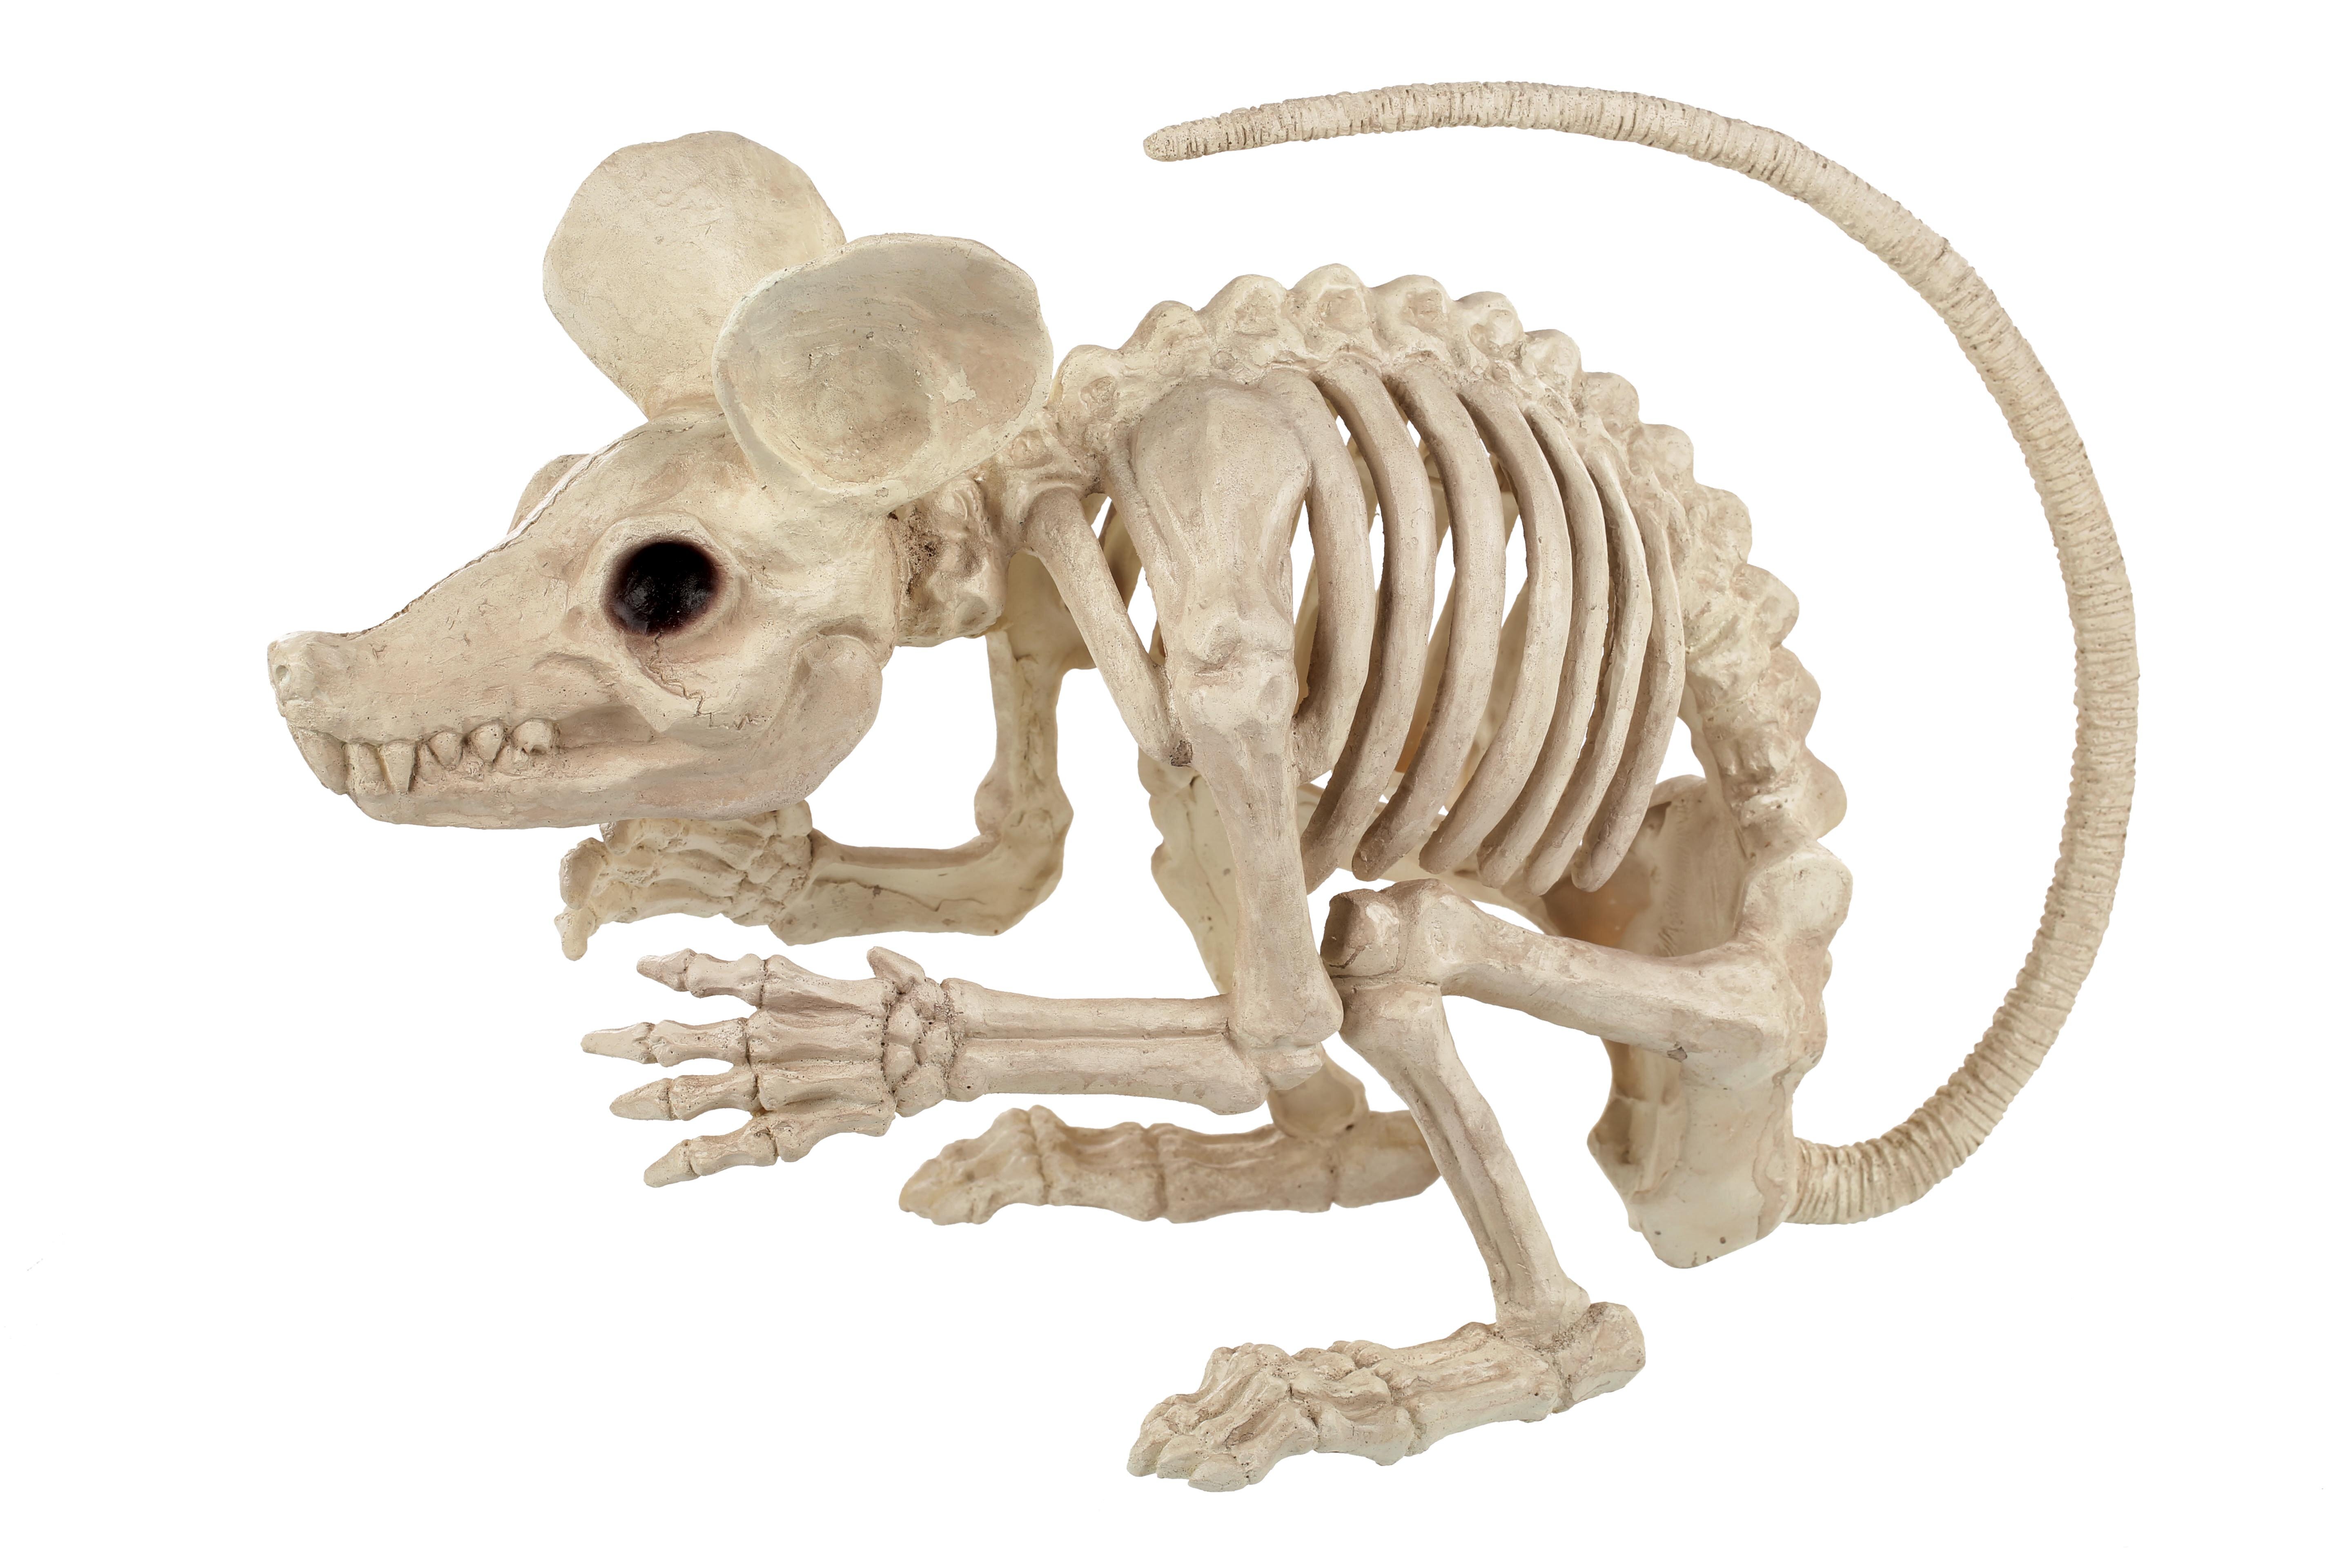 The Holiday Aisle Attack Rat Skeleton Figurine Wayfair